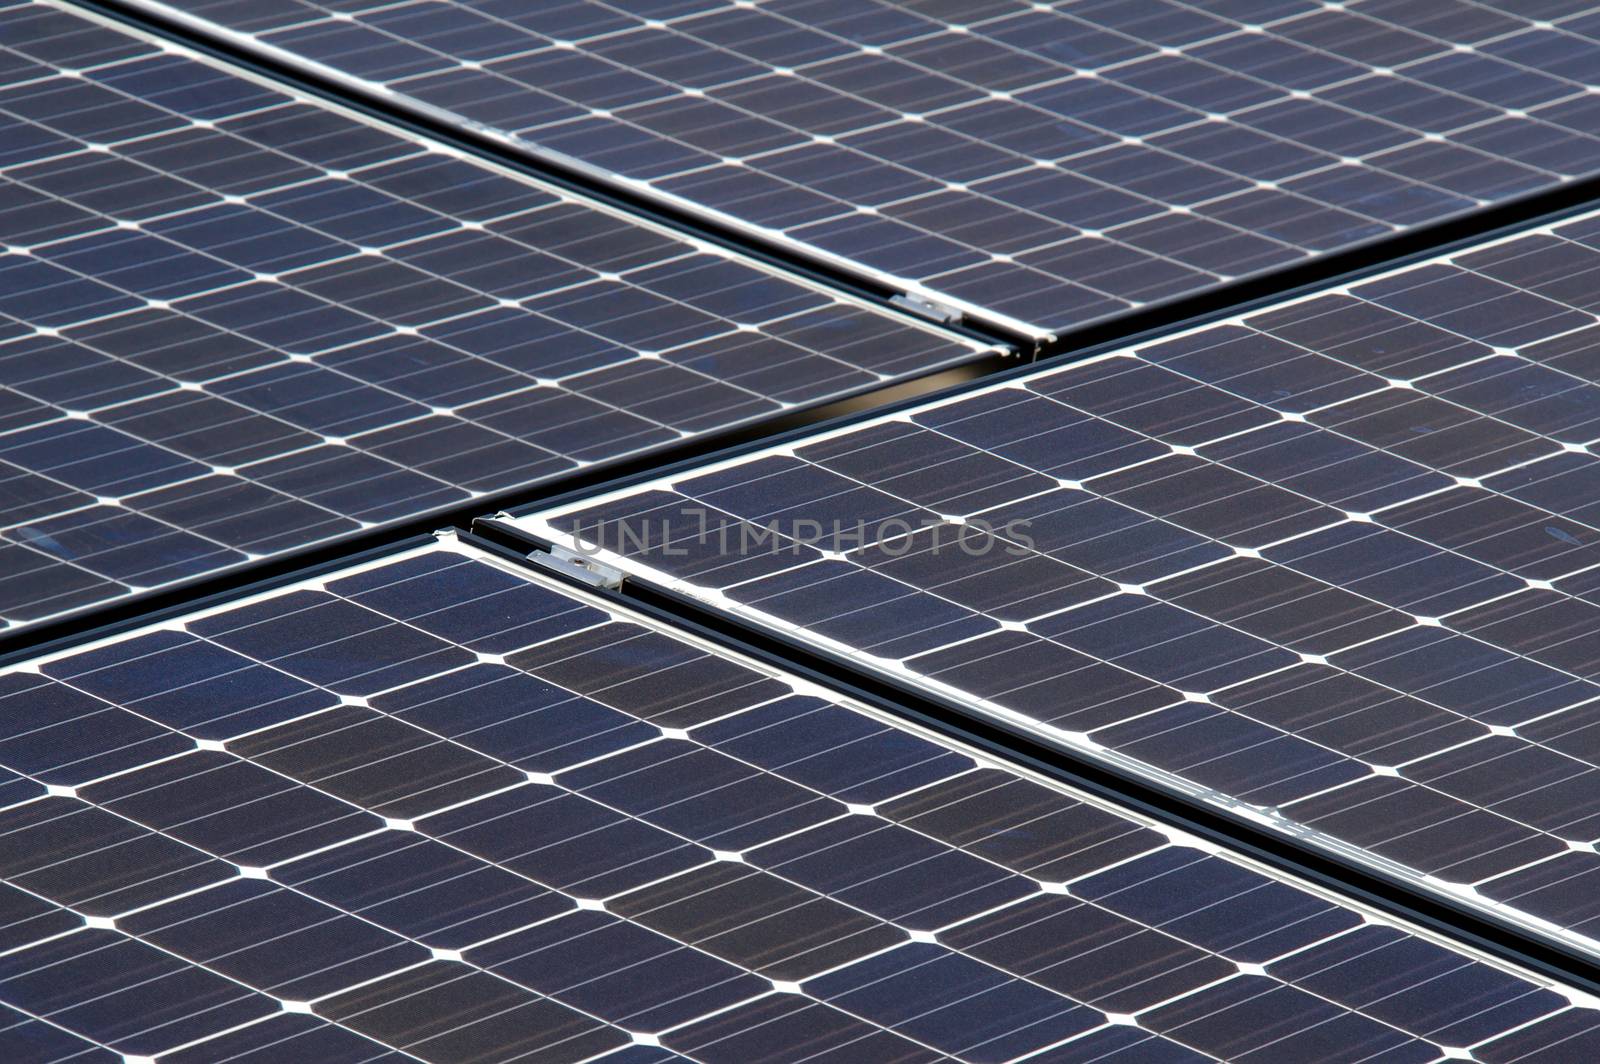 Solar farm built from many solar panels to maximize the amount of renewable energy produced.